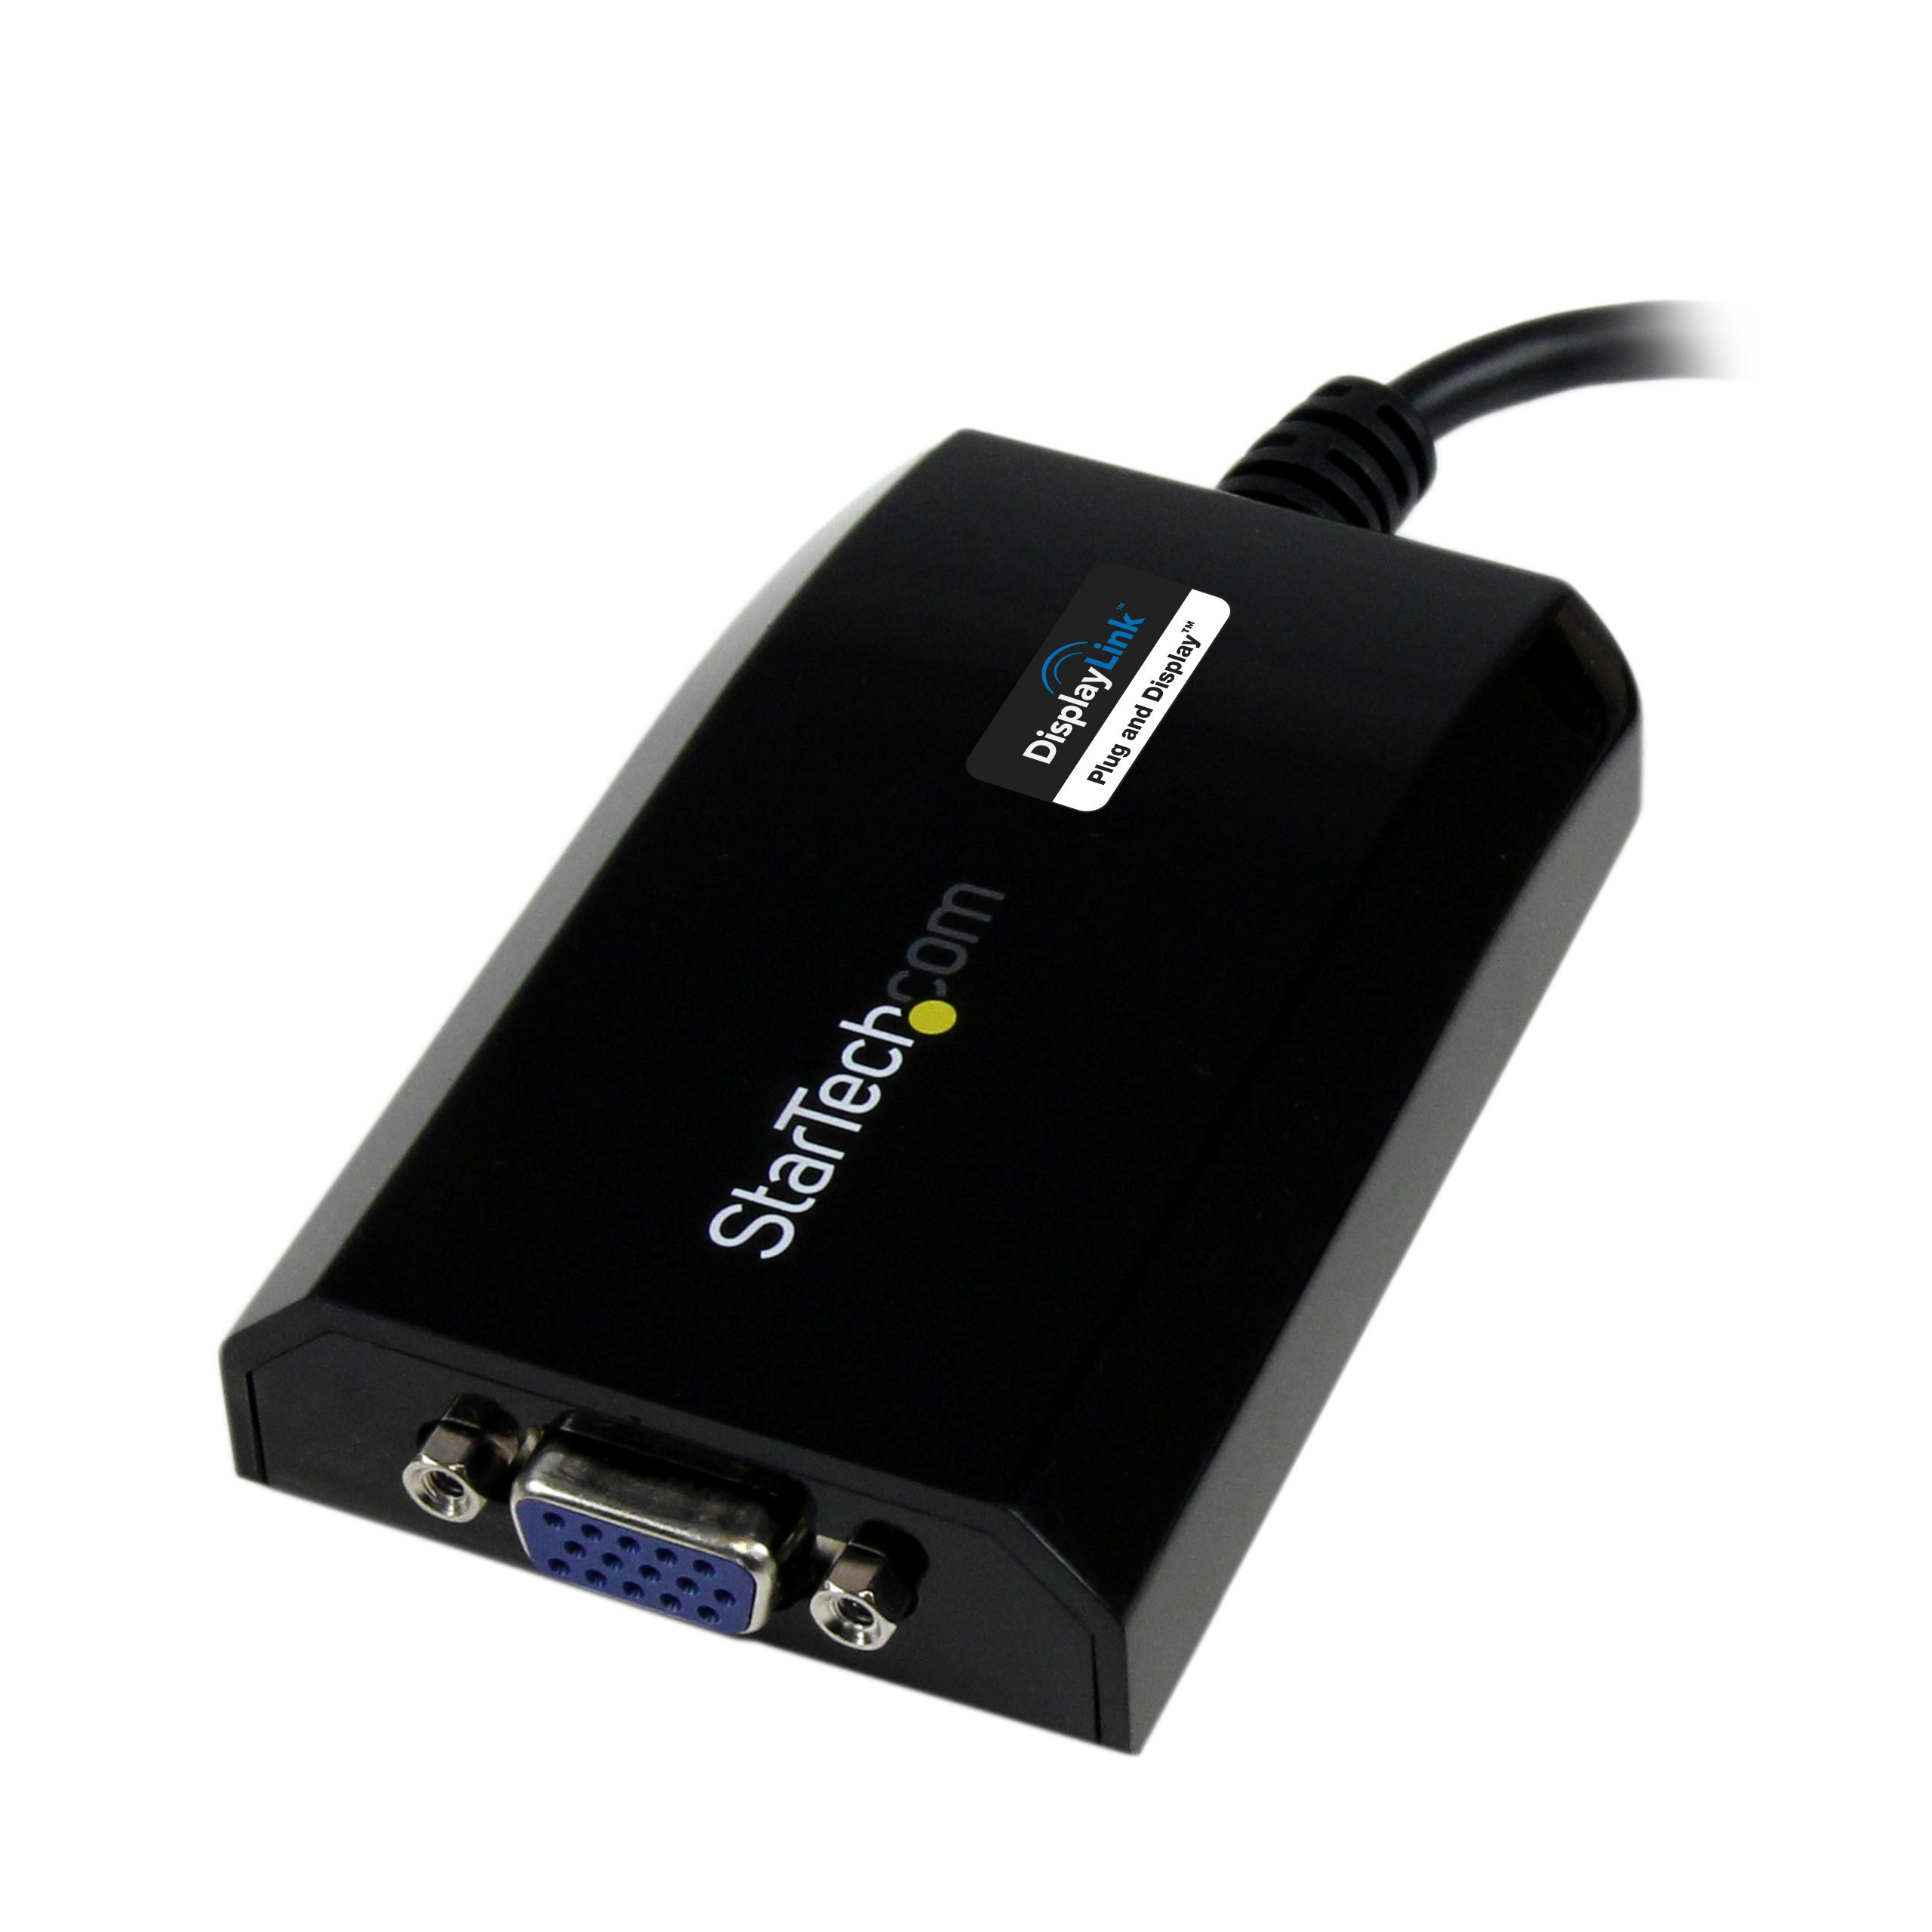 StarTech.com USB 3.0 to VGA Display Adapter 1920x1200 1080p, DisplayLink Certified, Video Converter w/ External Graphics Card - Mac & PC (USB32VGAPRO), Black